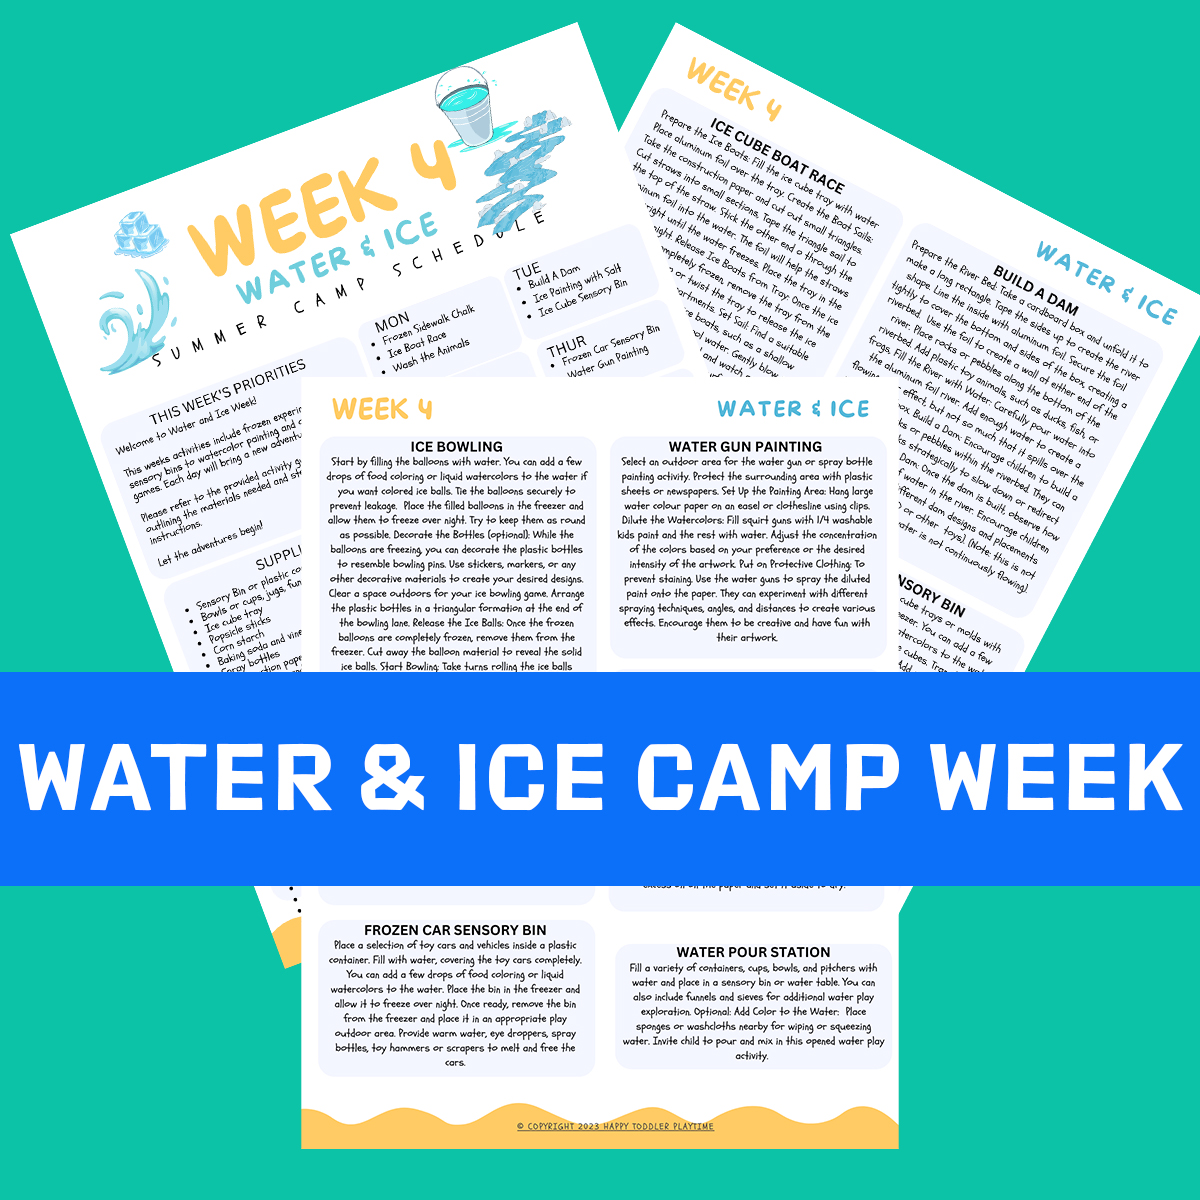 Water & Ice Camp Week